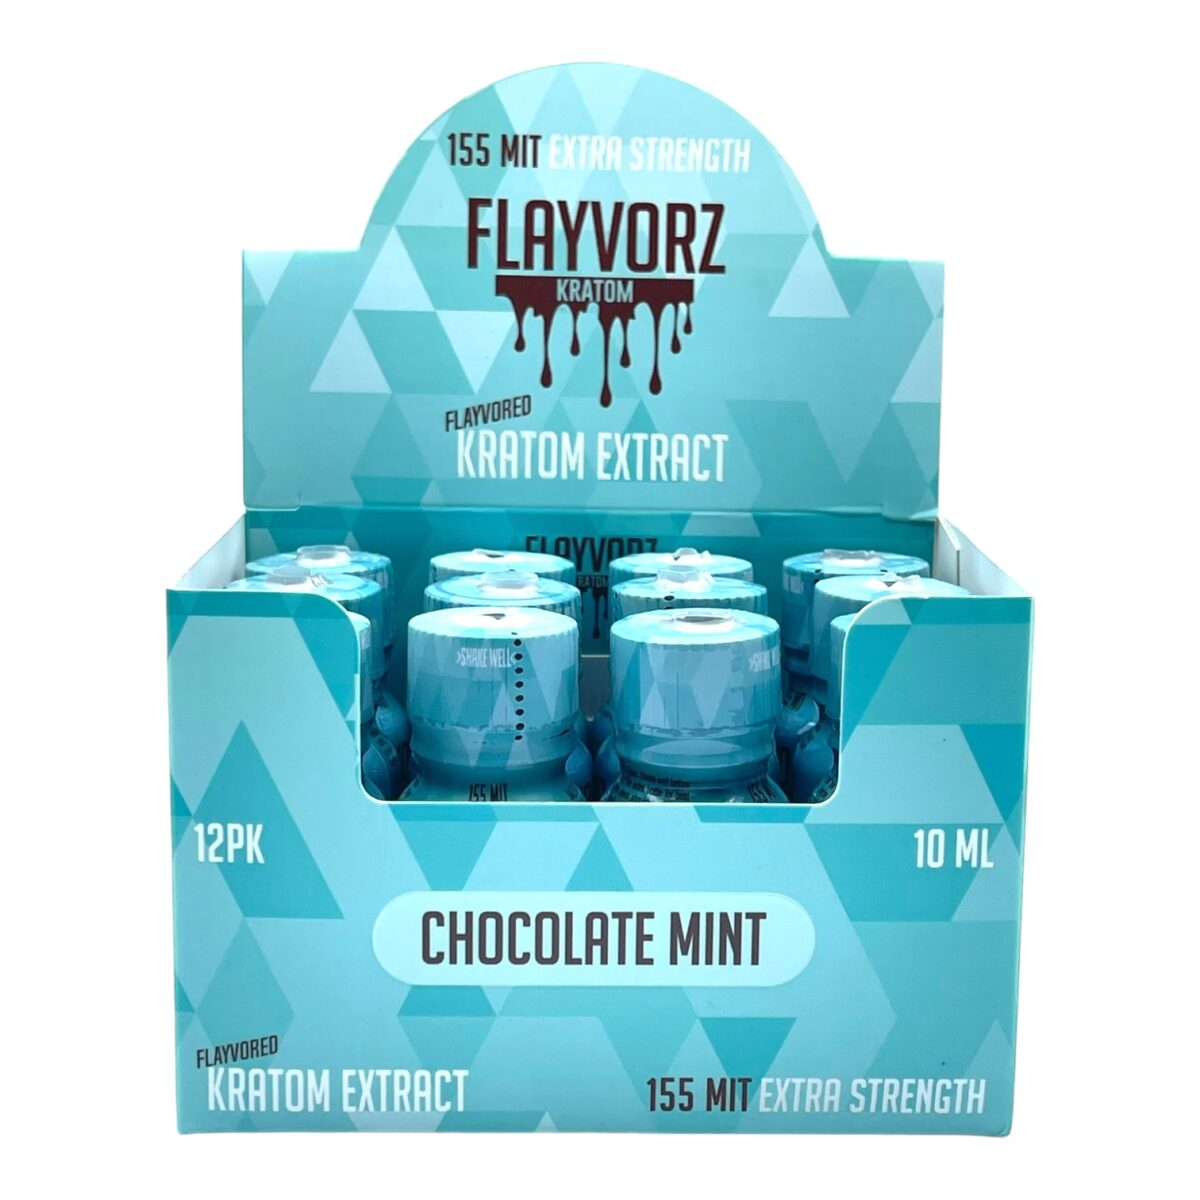 Flayvorz Kratom Shot Chocolate Mint 155 MIT – 10mL